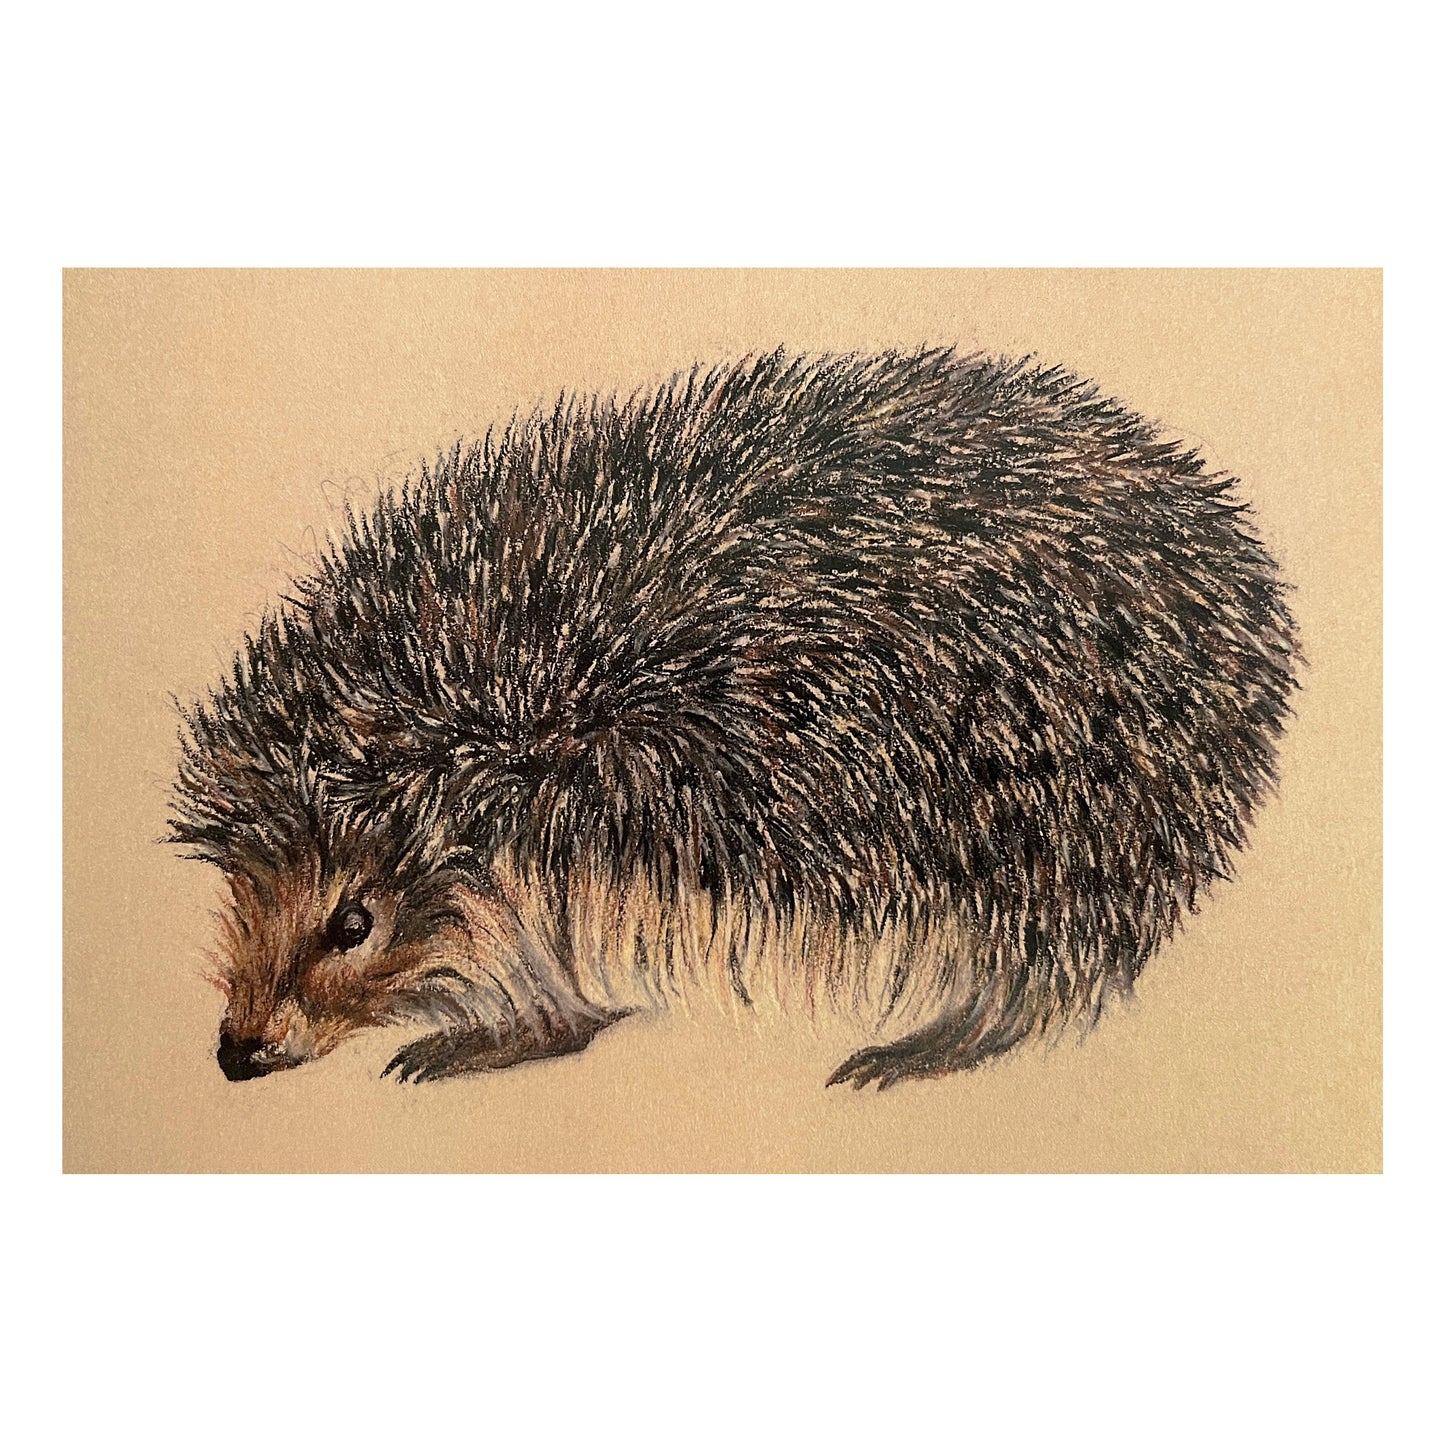 "Hedgehog" Signed Limited Edition Giclée Print